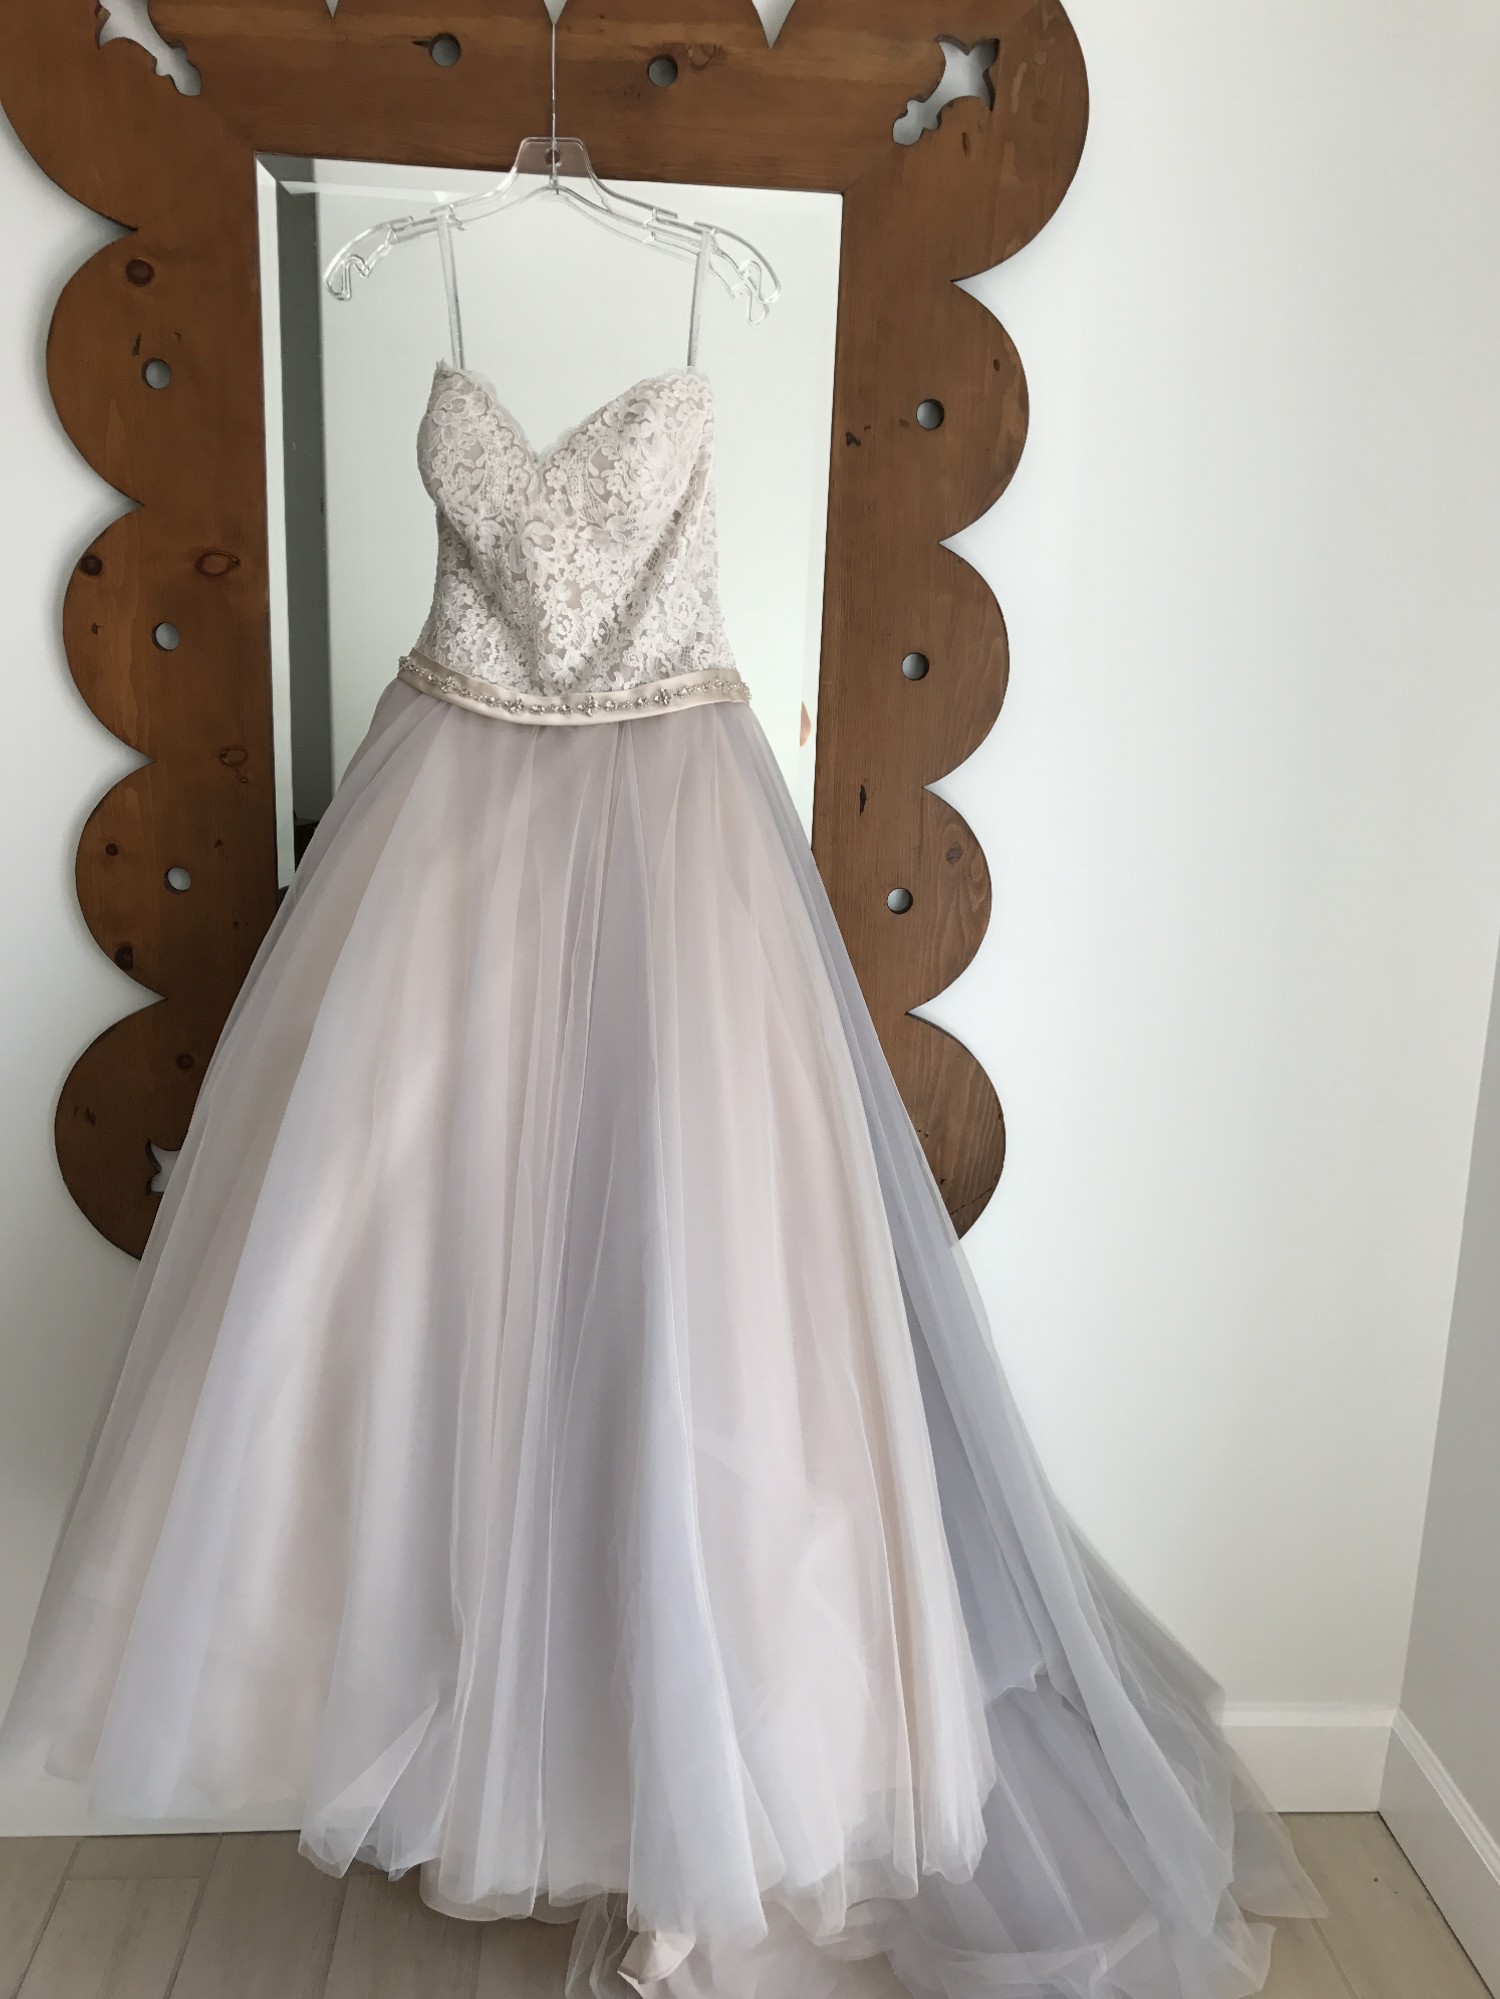  Allure  Bridals  Romance New Wedding  Dress  on Sale 